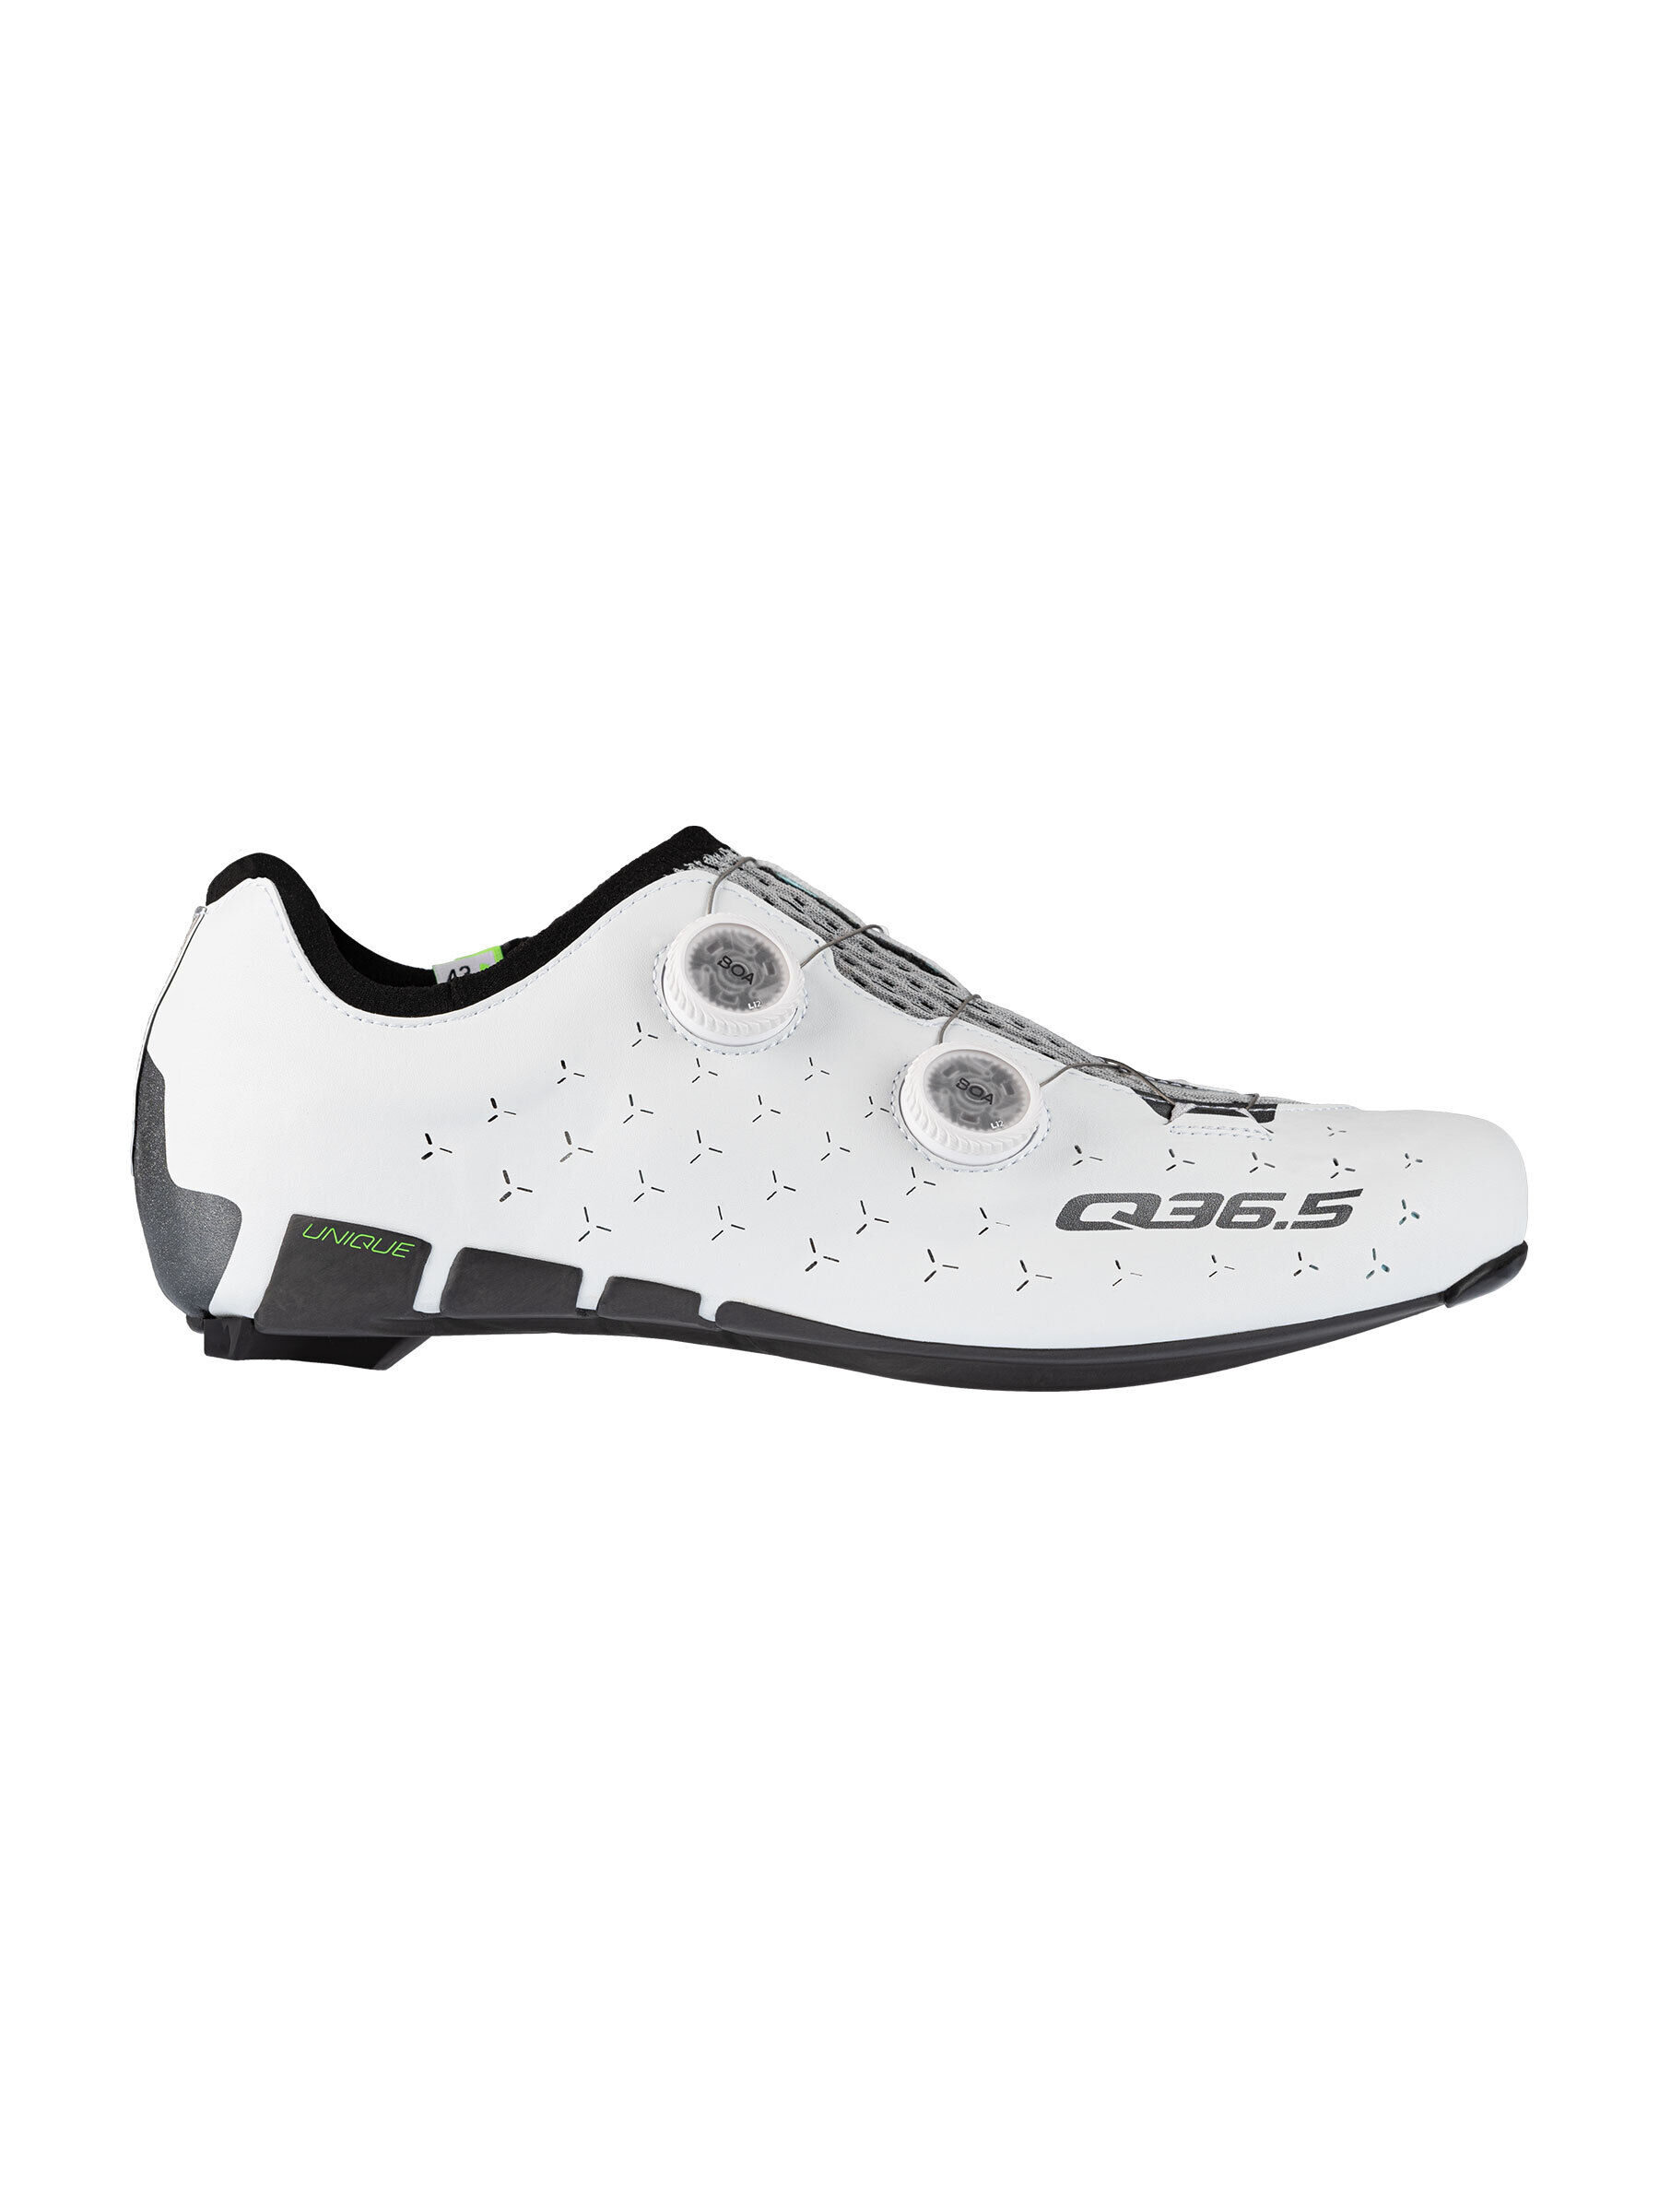 Q36.5 Unique Road Shoes - Zapatillas de ciclismo